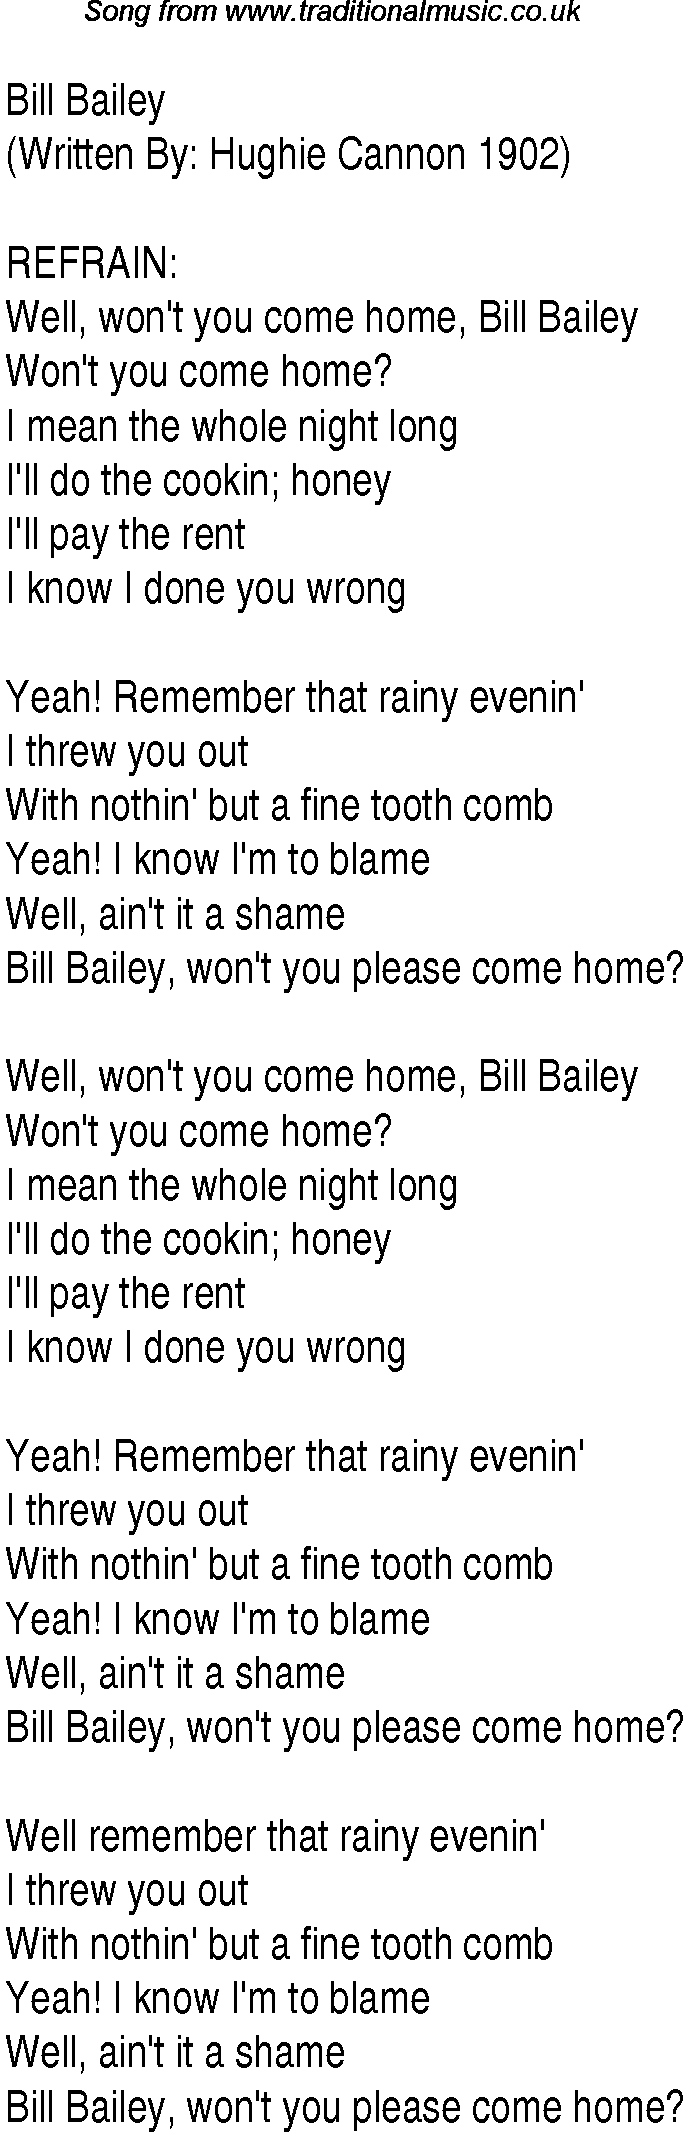 1940s top songs - lyrics for Bill Bailey